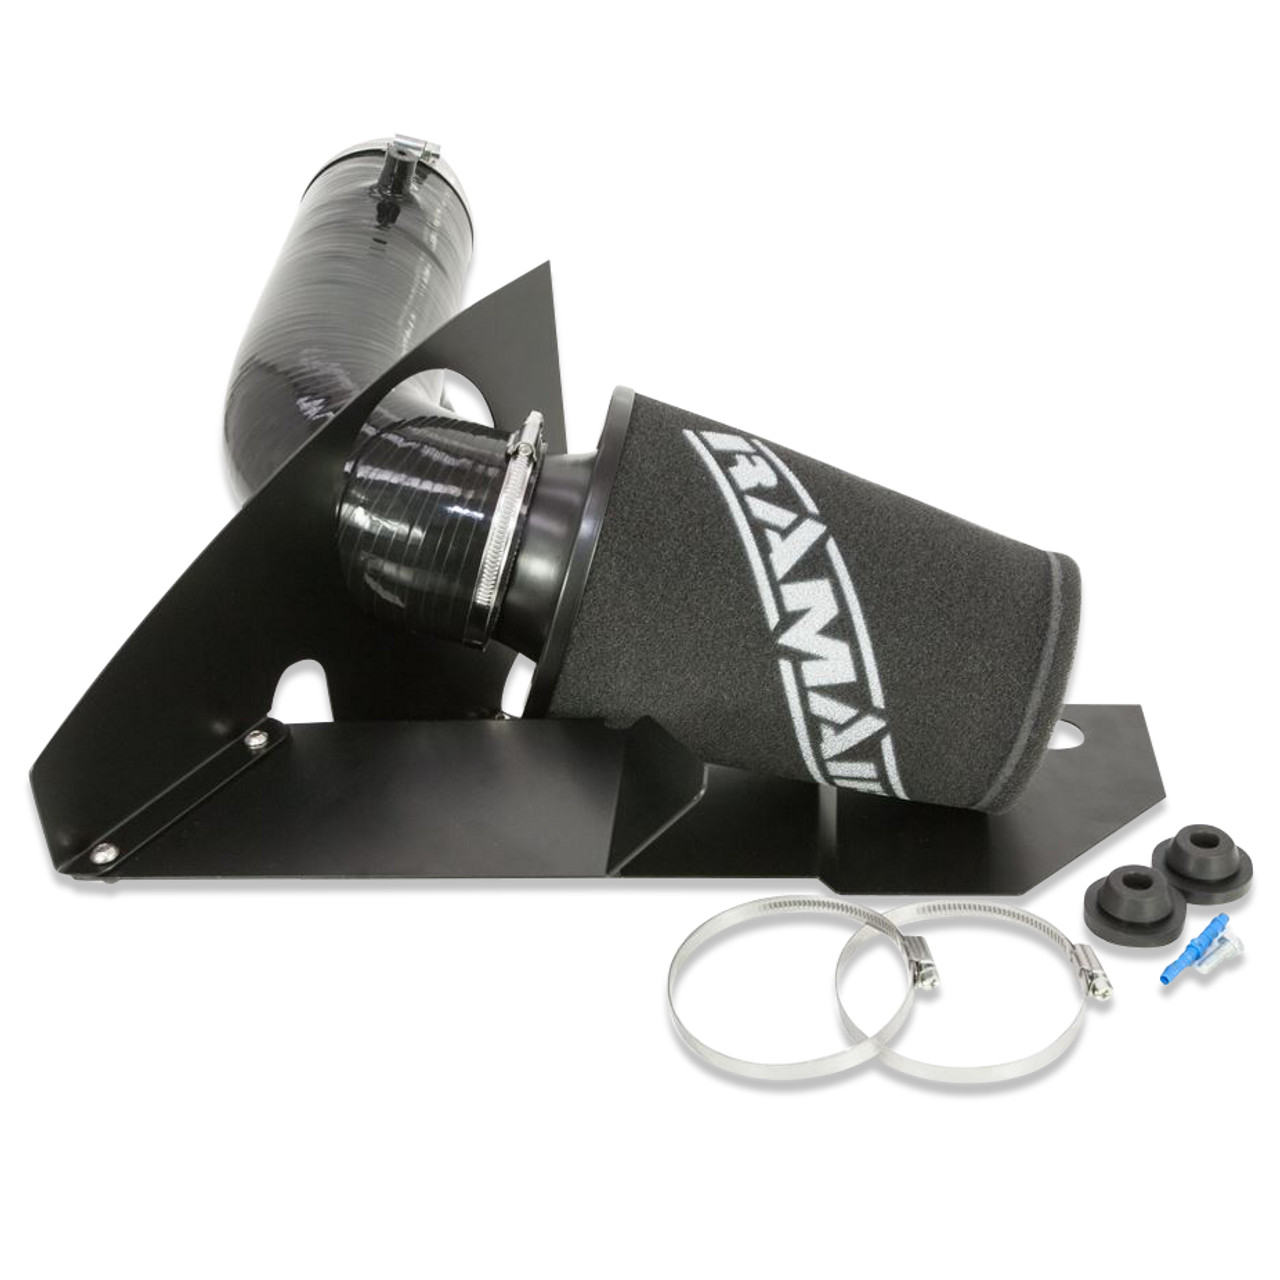 RAMAIR Performance Foam Air Filter & Heat Shield Induction Kit for Audi, Seat & VW 1.9 & 2.0 TDI MK5 & MK6 Golf, Leon, A3